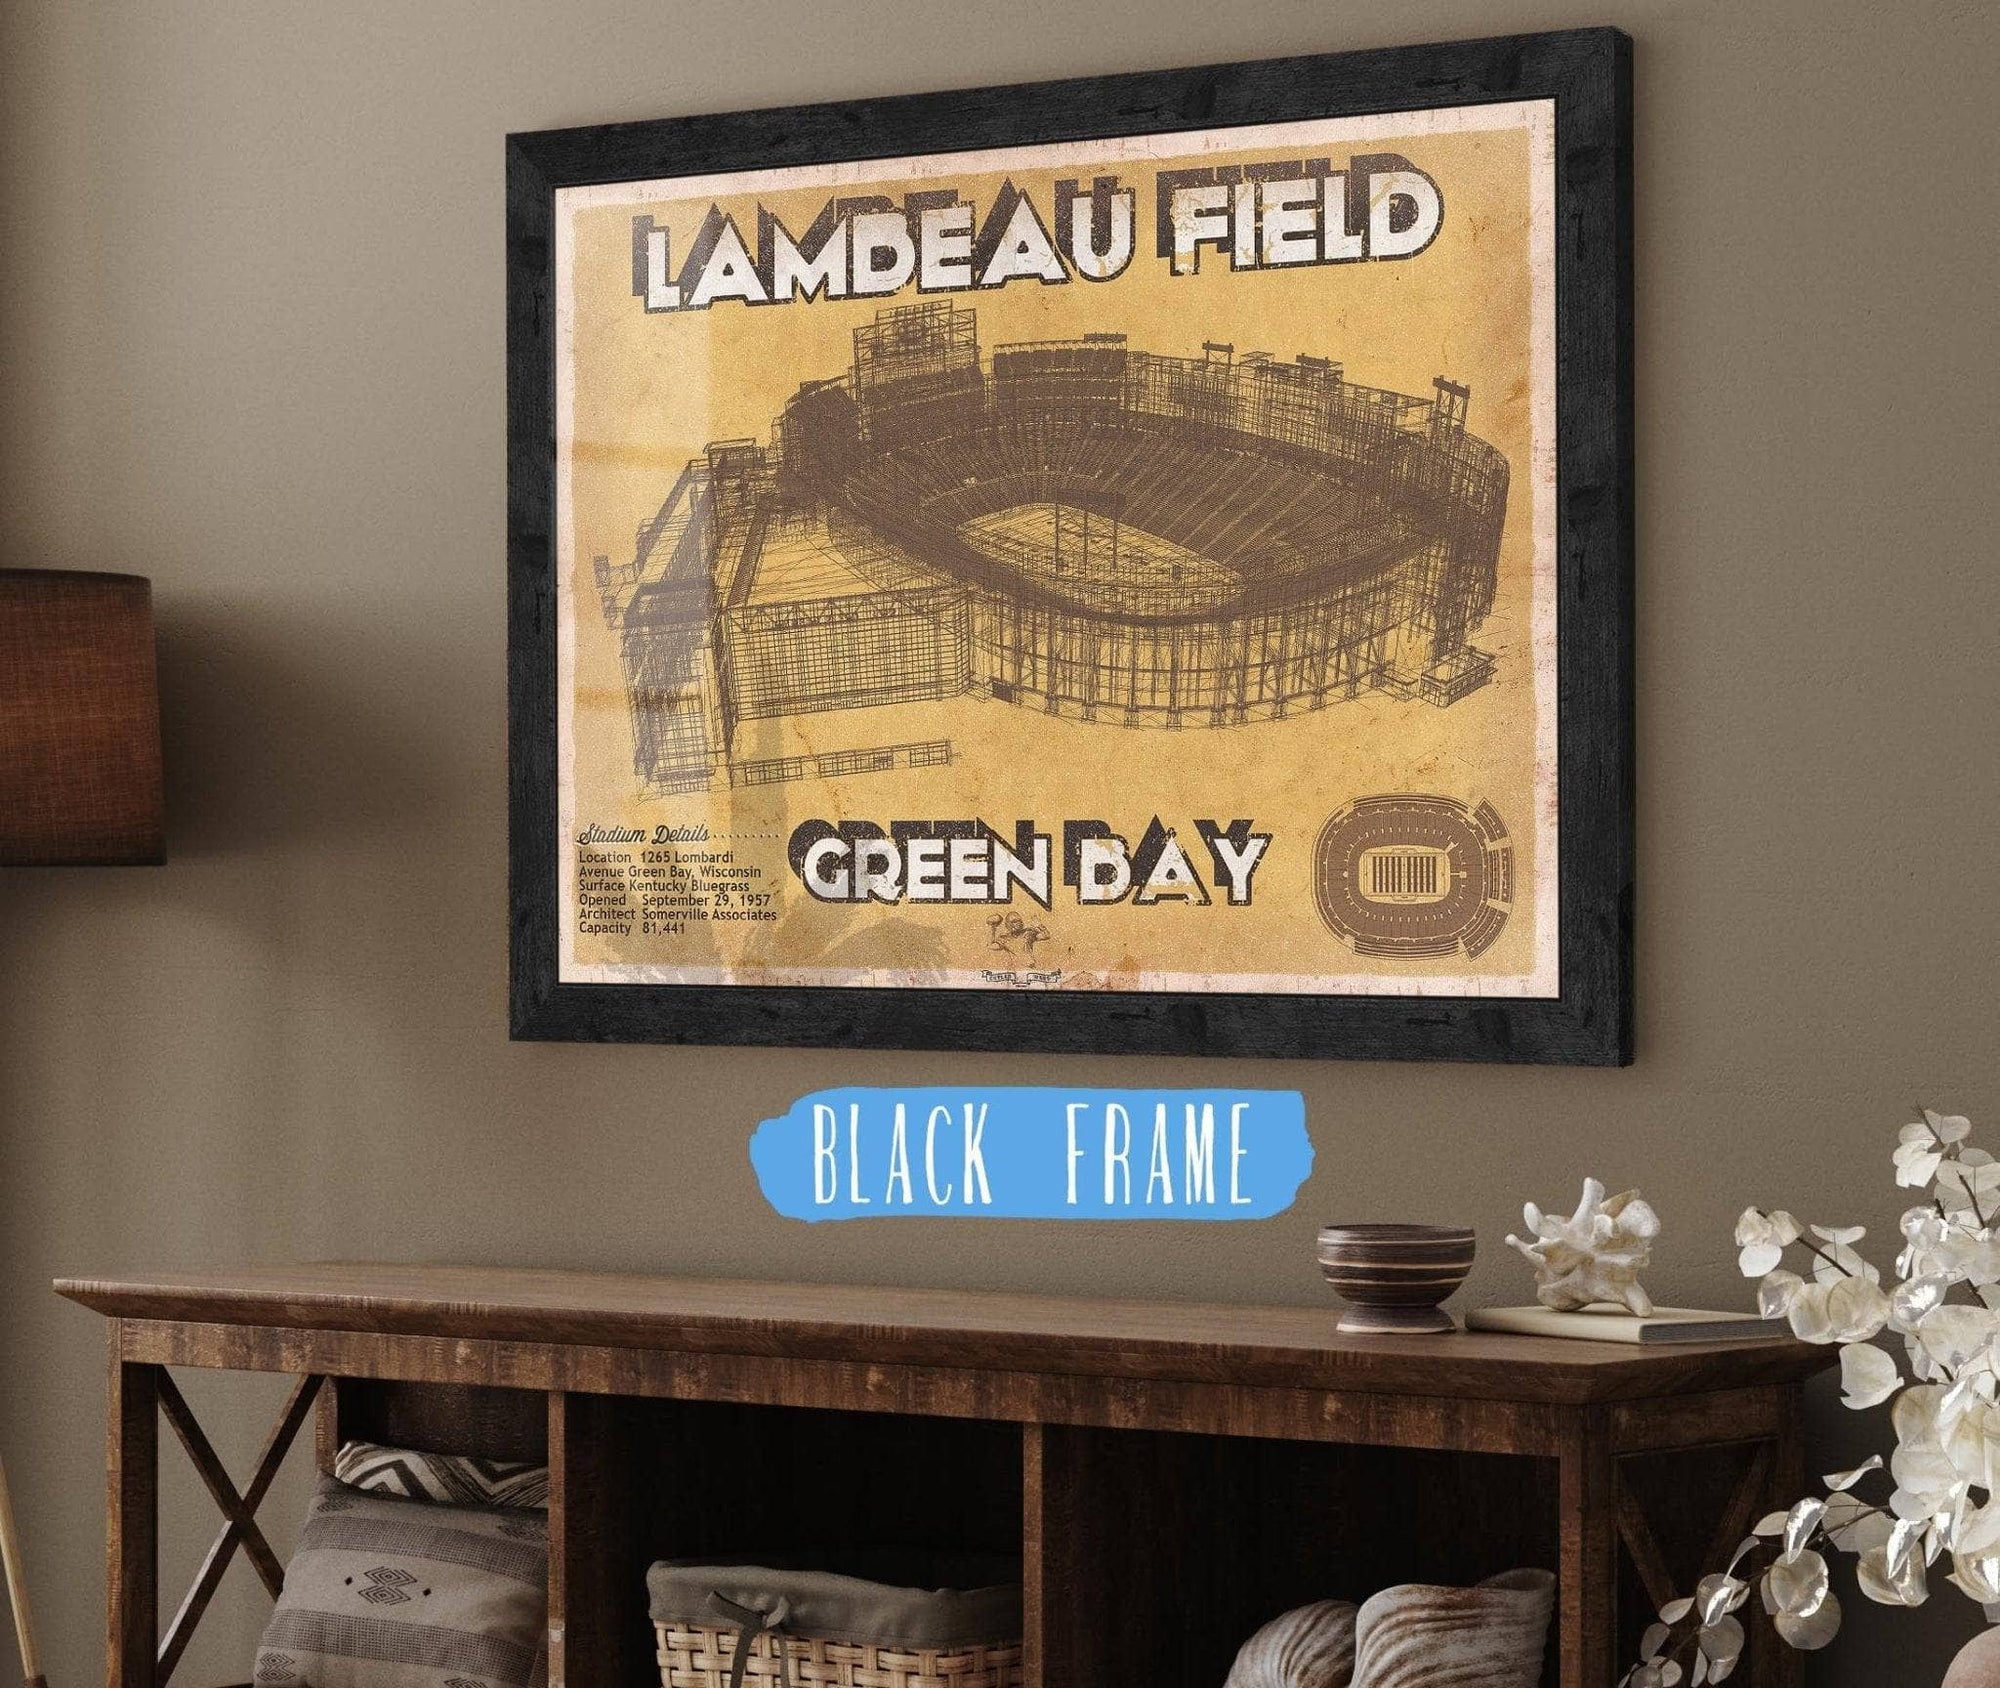 Cutler West Pro Football Collection 14" x 11" / Black Frame Green Bay Packers - Lambeau Field Vintage Football Print 698877220-TEAM_65963